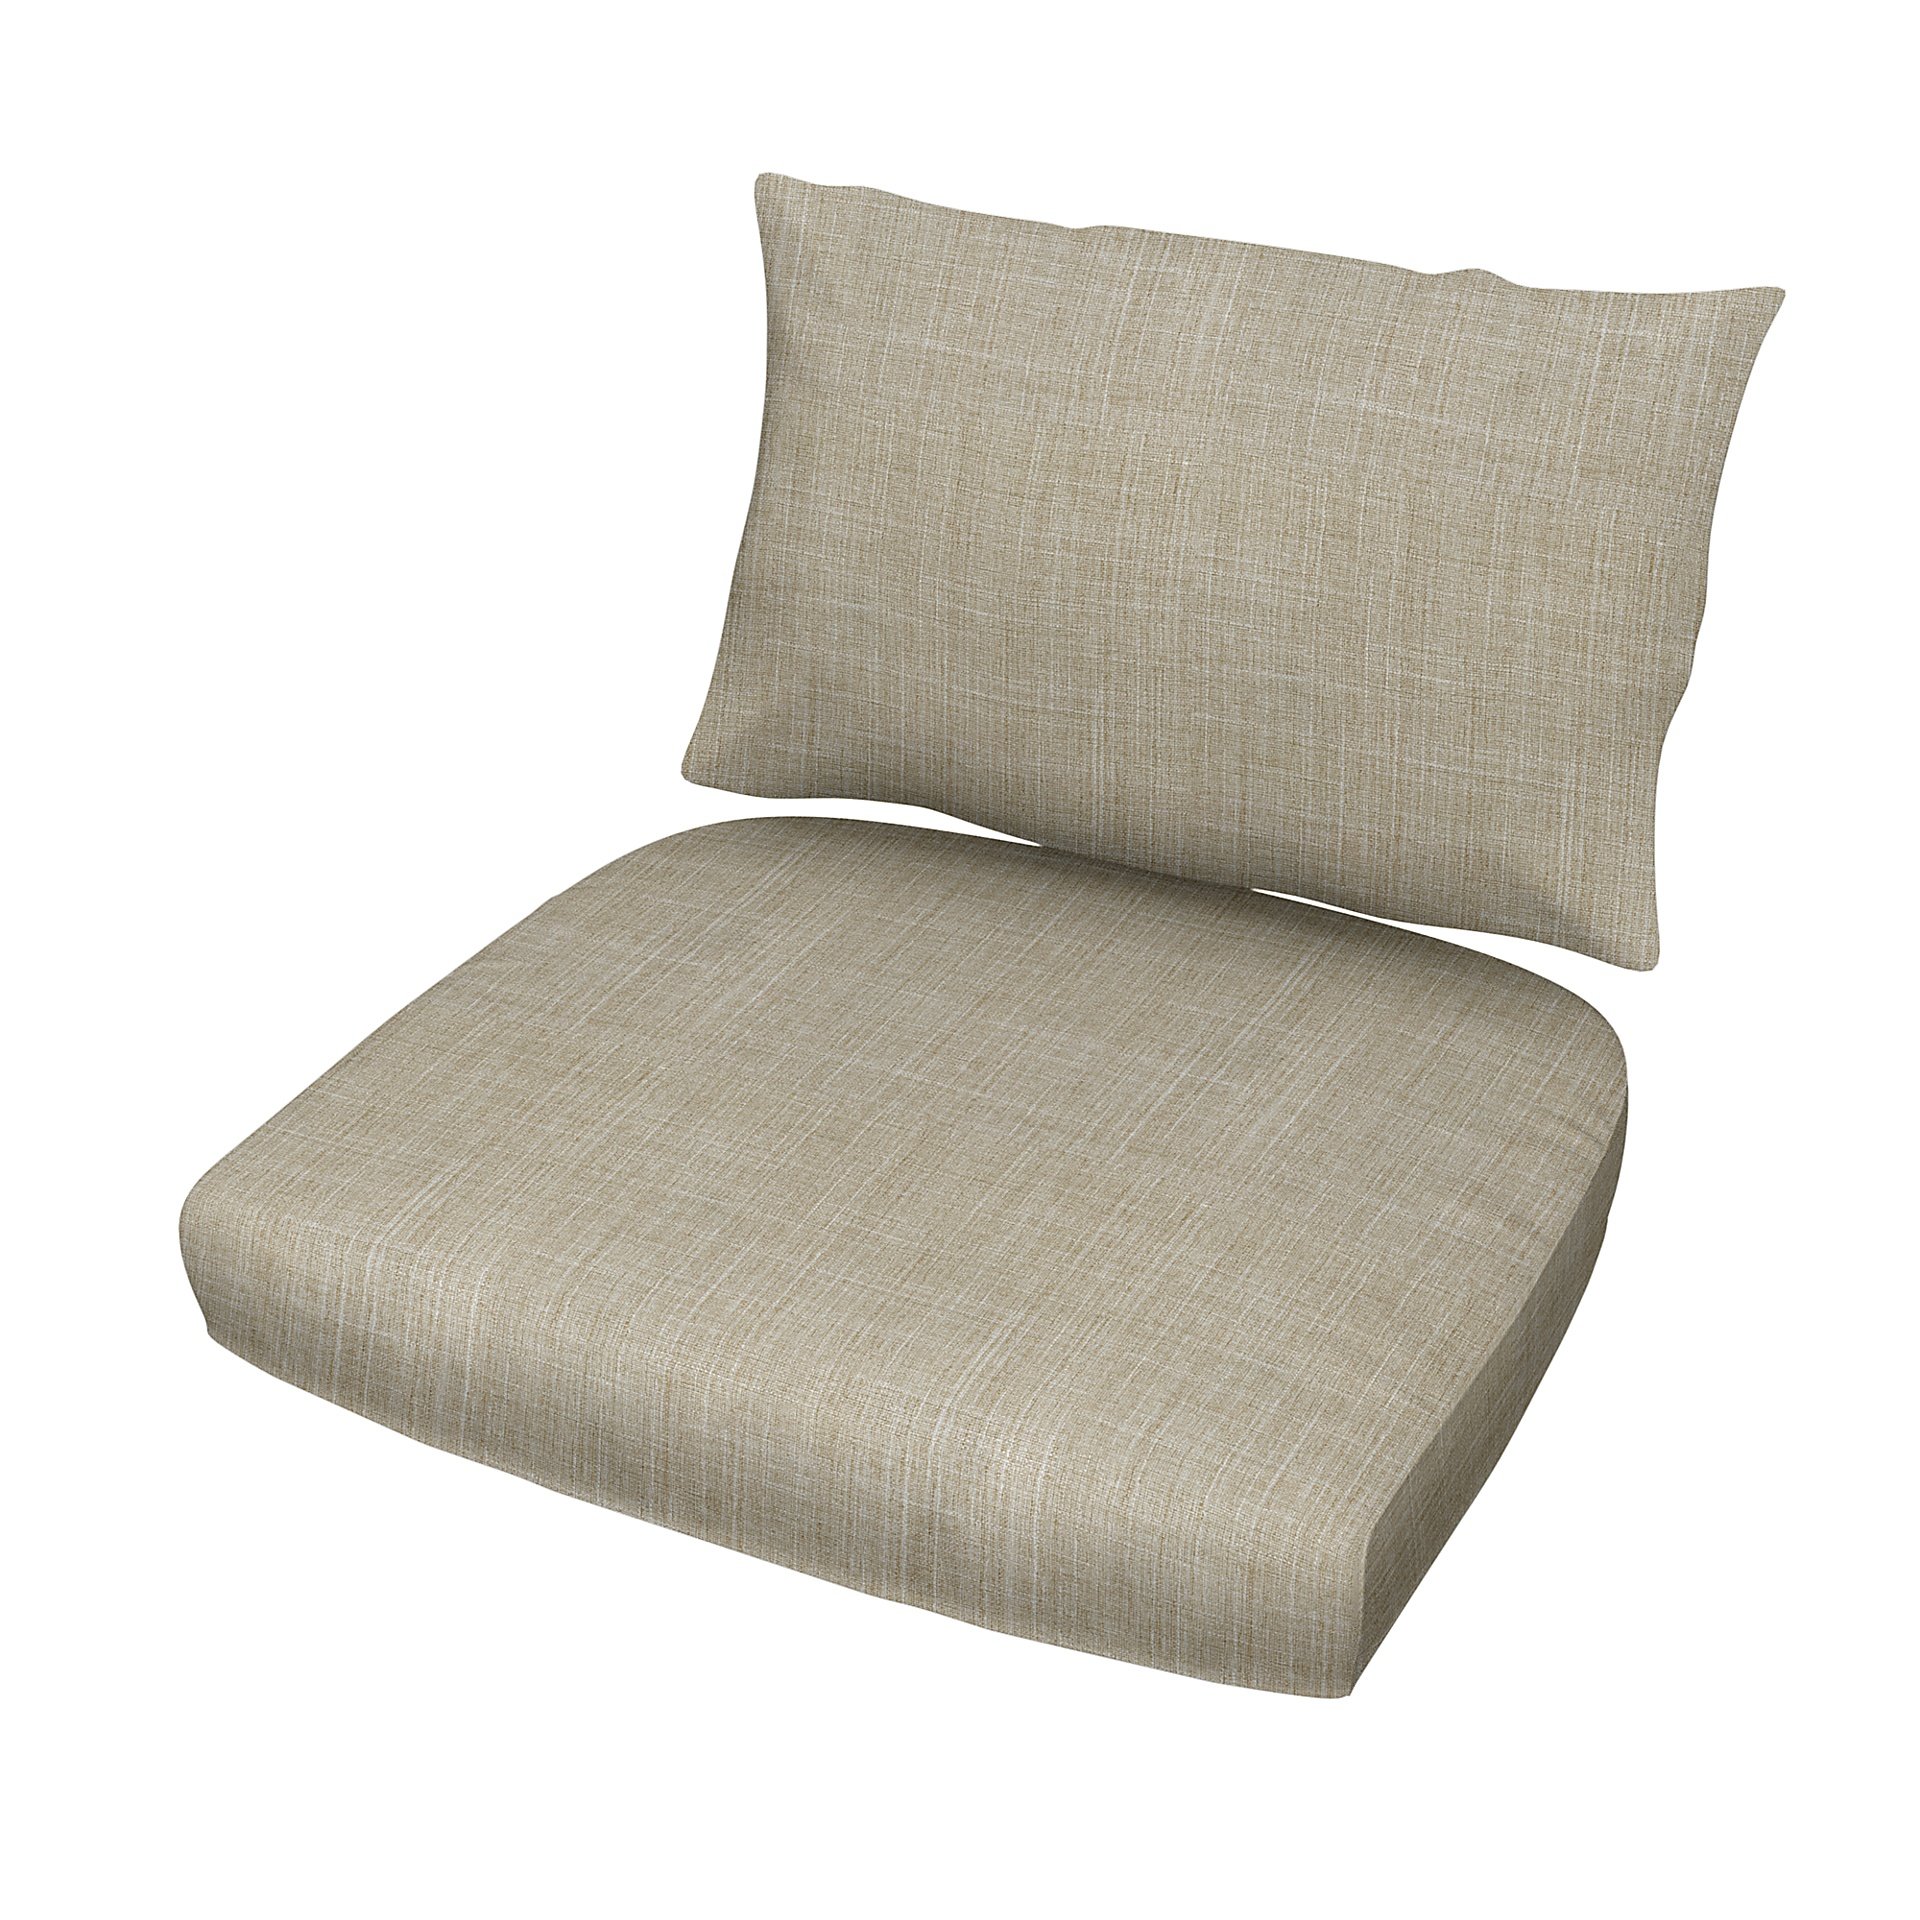 IKEA - Stockholm Rattan Chair Cushion Cover Set, Sand Beige, Boucle & Texture - Bemz